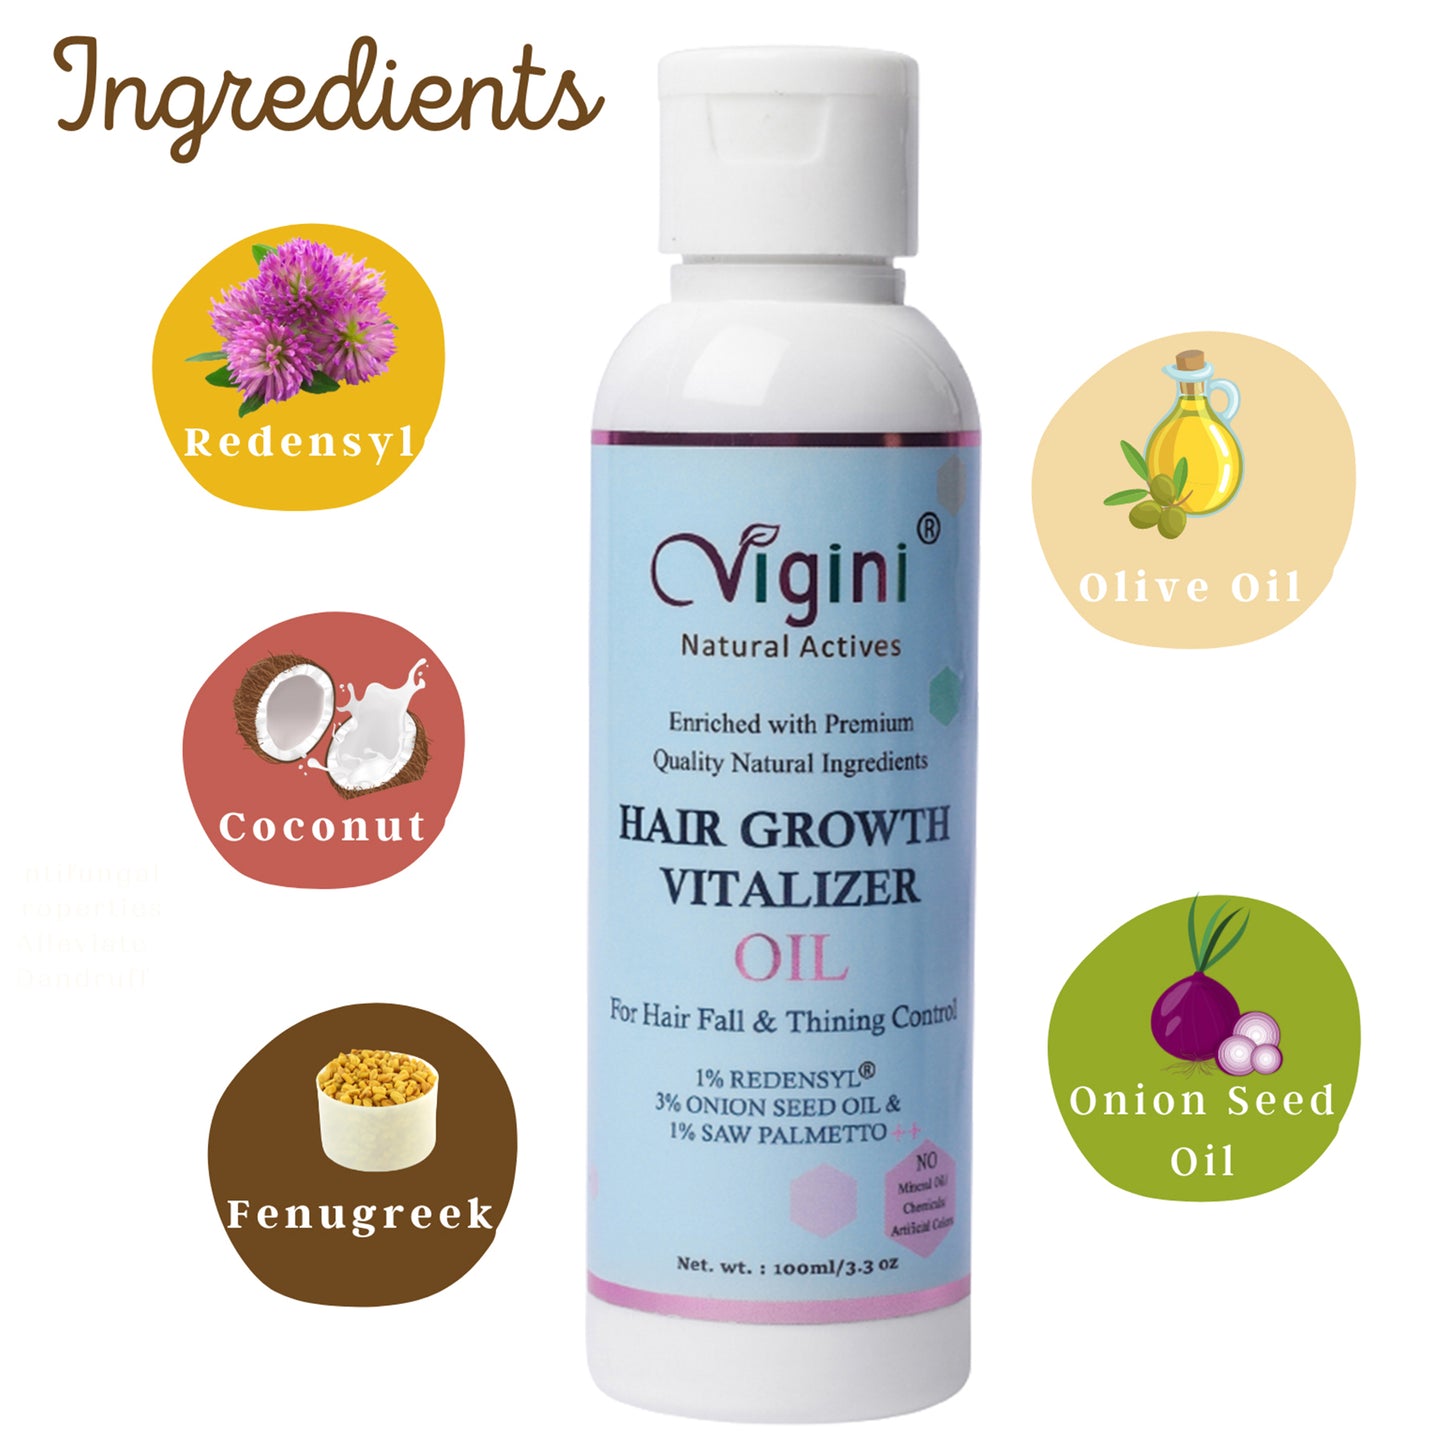 Vigini 1% Redensyl Hair Growth Regowth Vitalizer Oil, 100ml